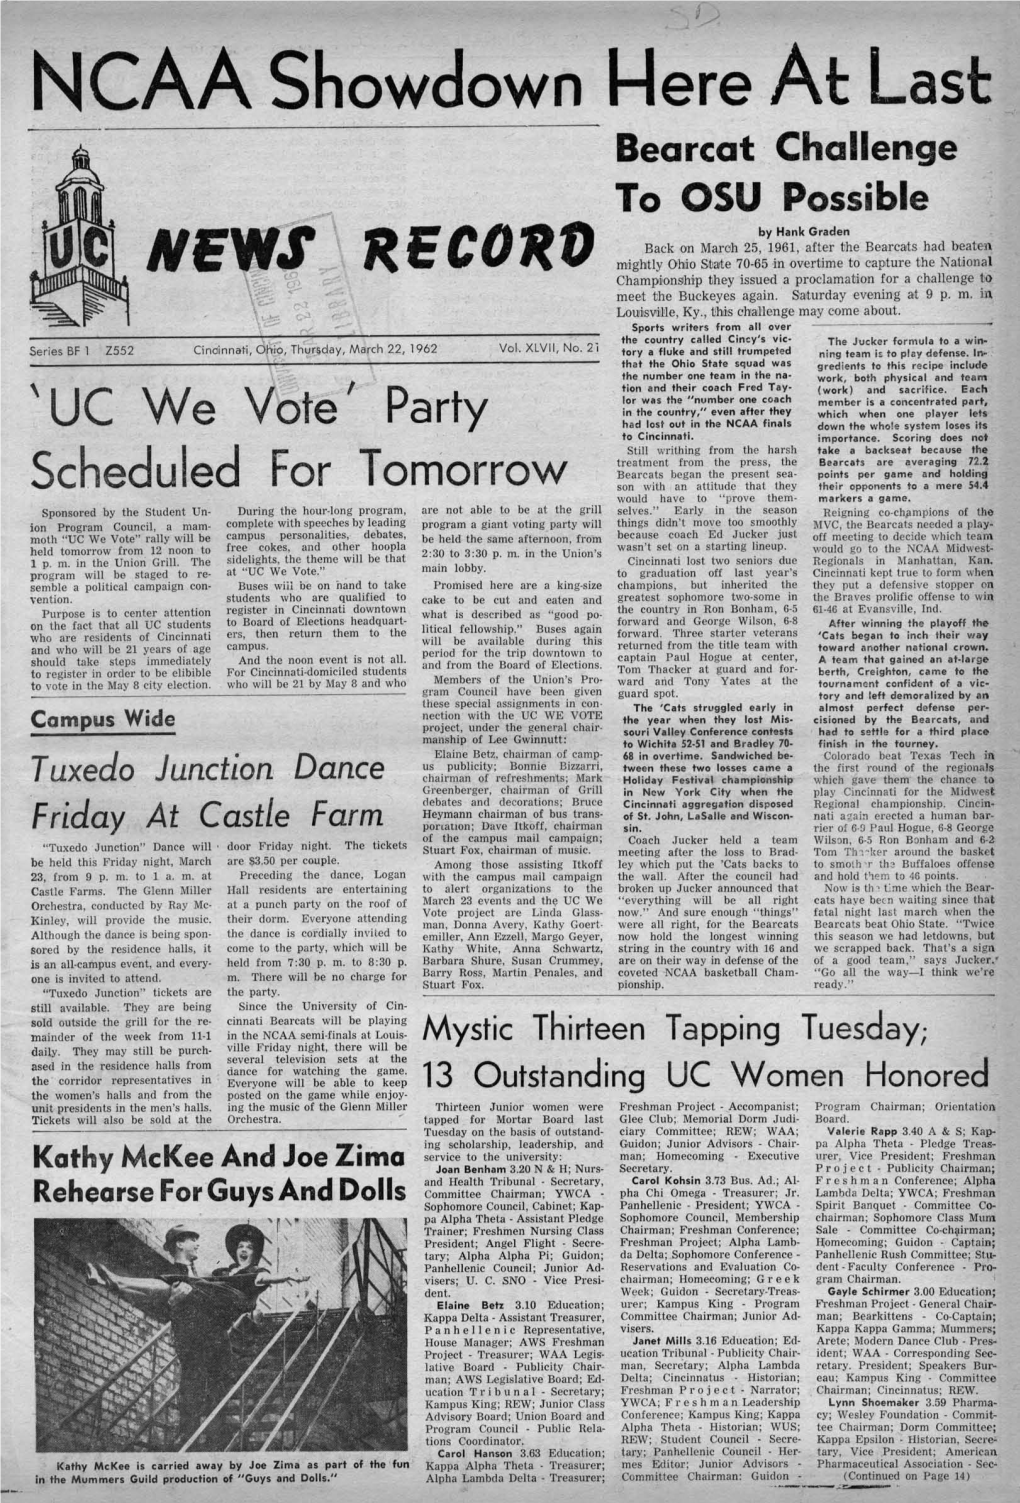 University of Cincinnati News Record. Thursday, March 22, 1962